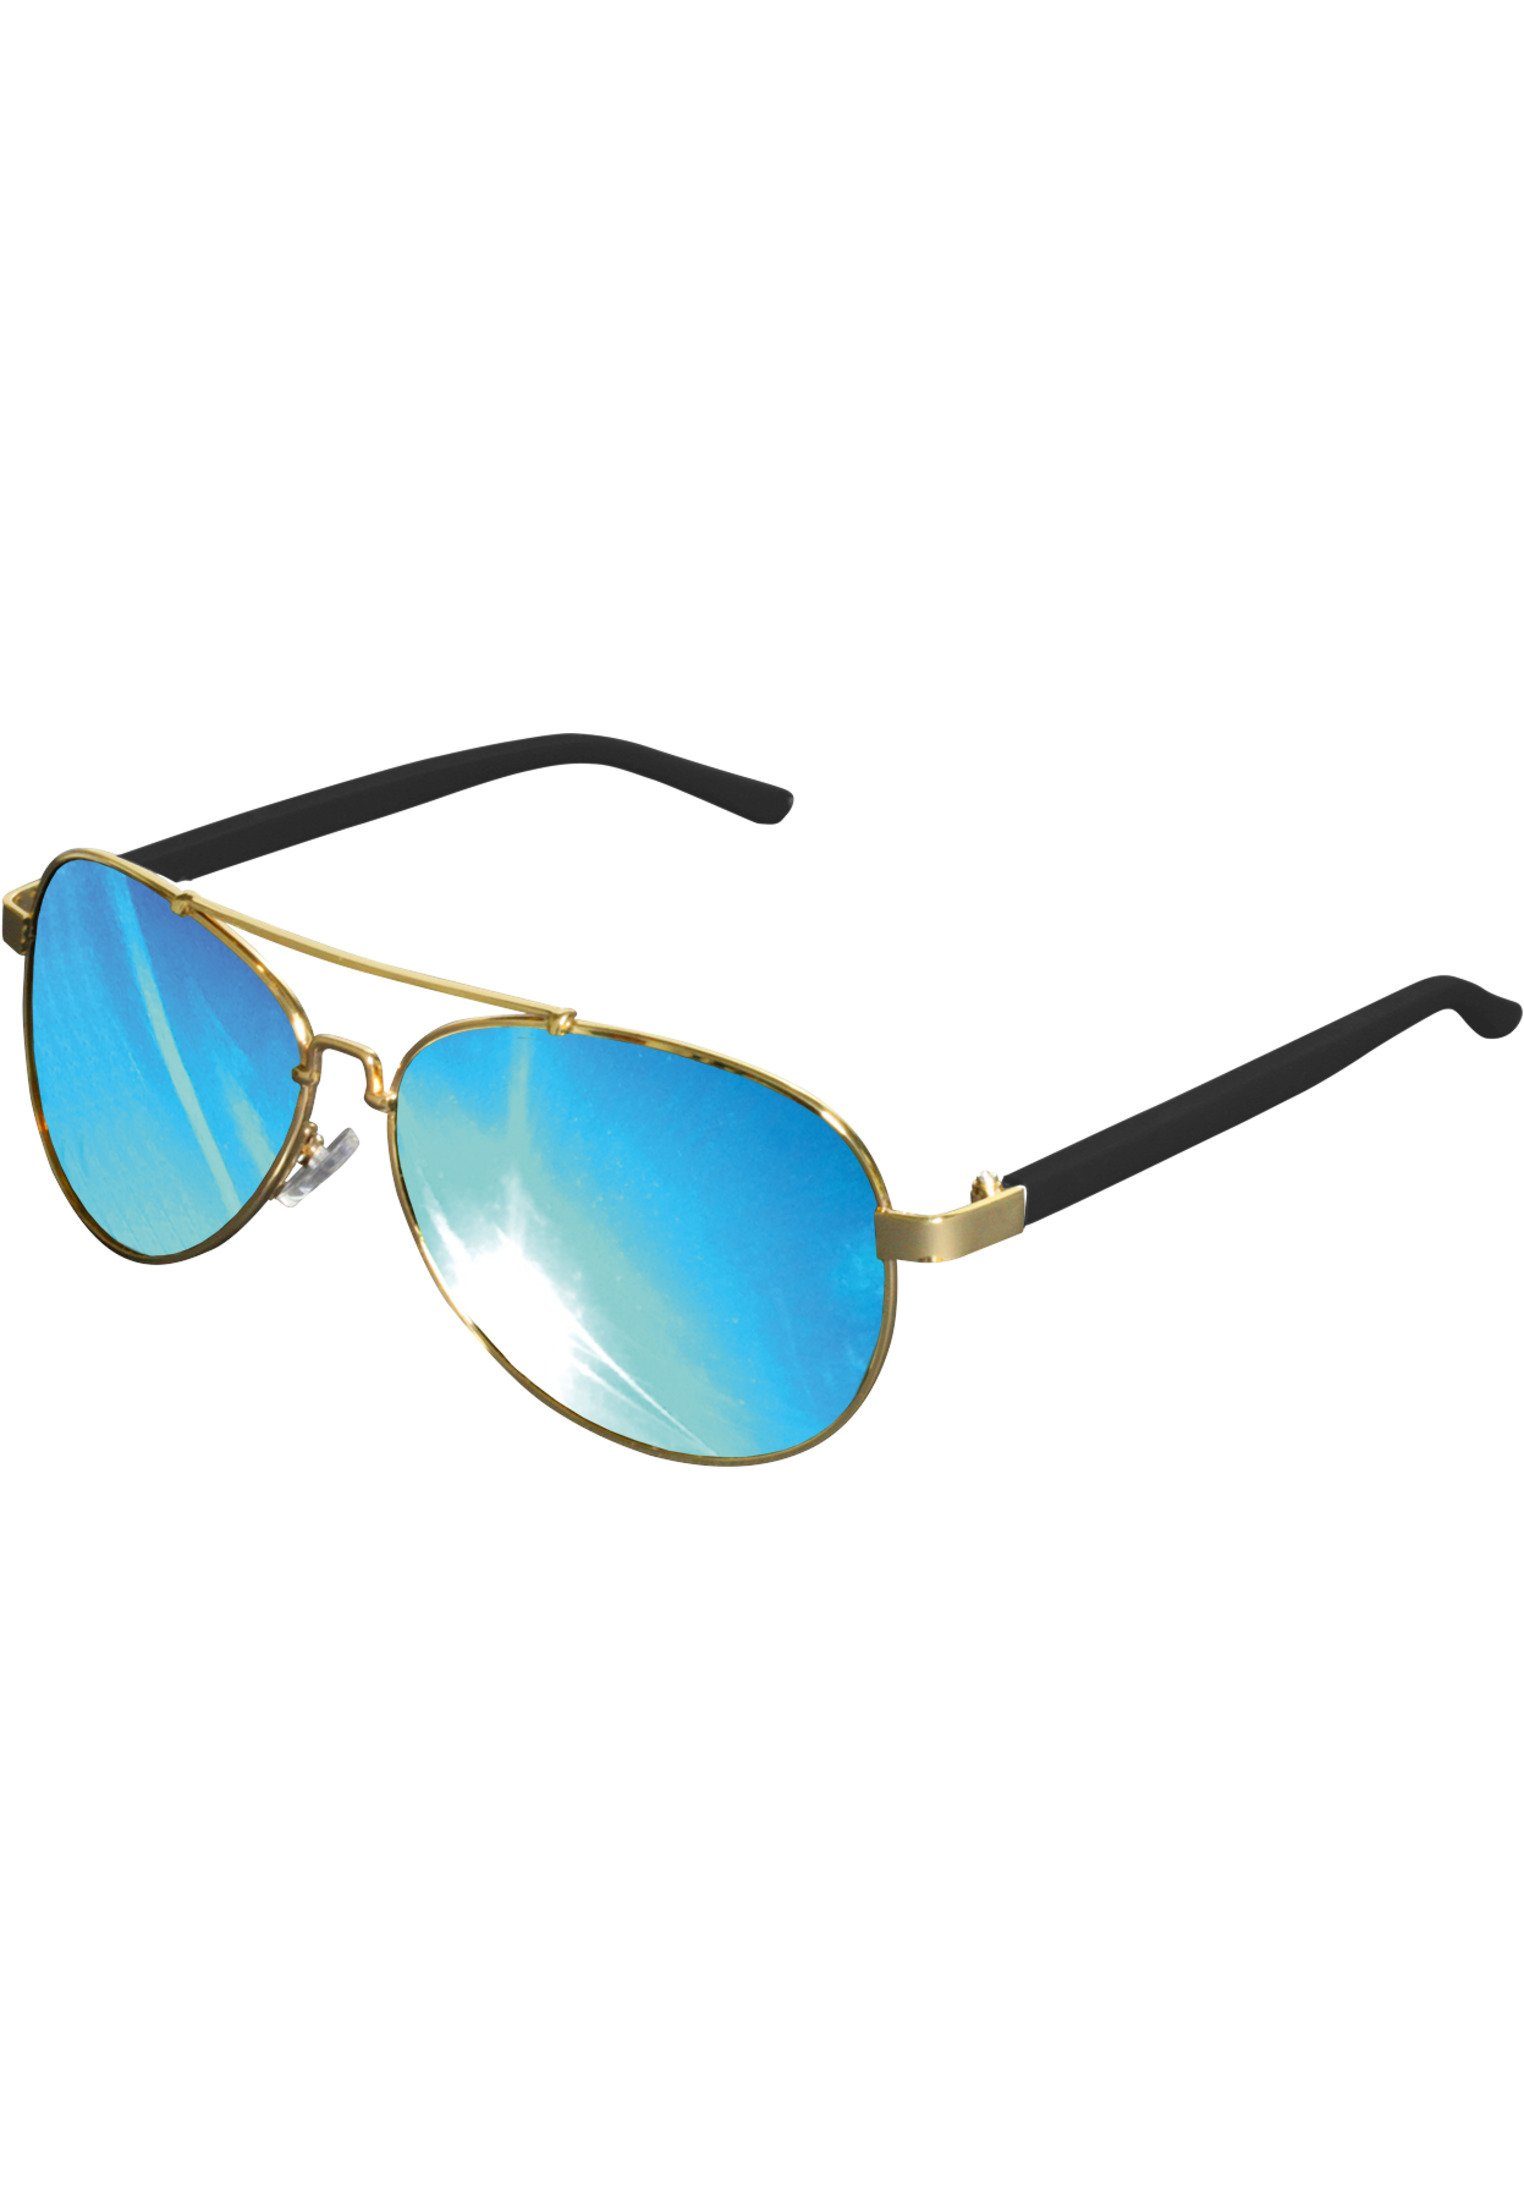 MSTRDS Sonnenbrille Accessoires gold/blue Sunglasses Mumbo Mirror